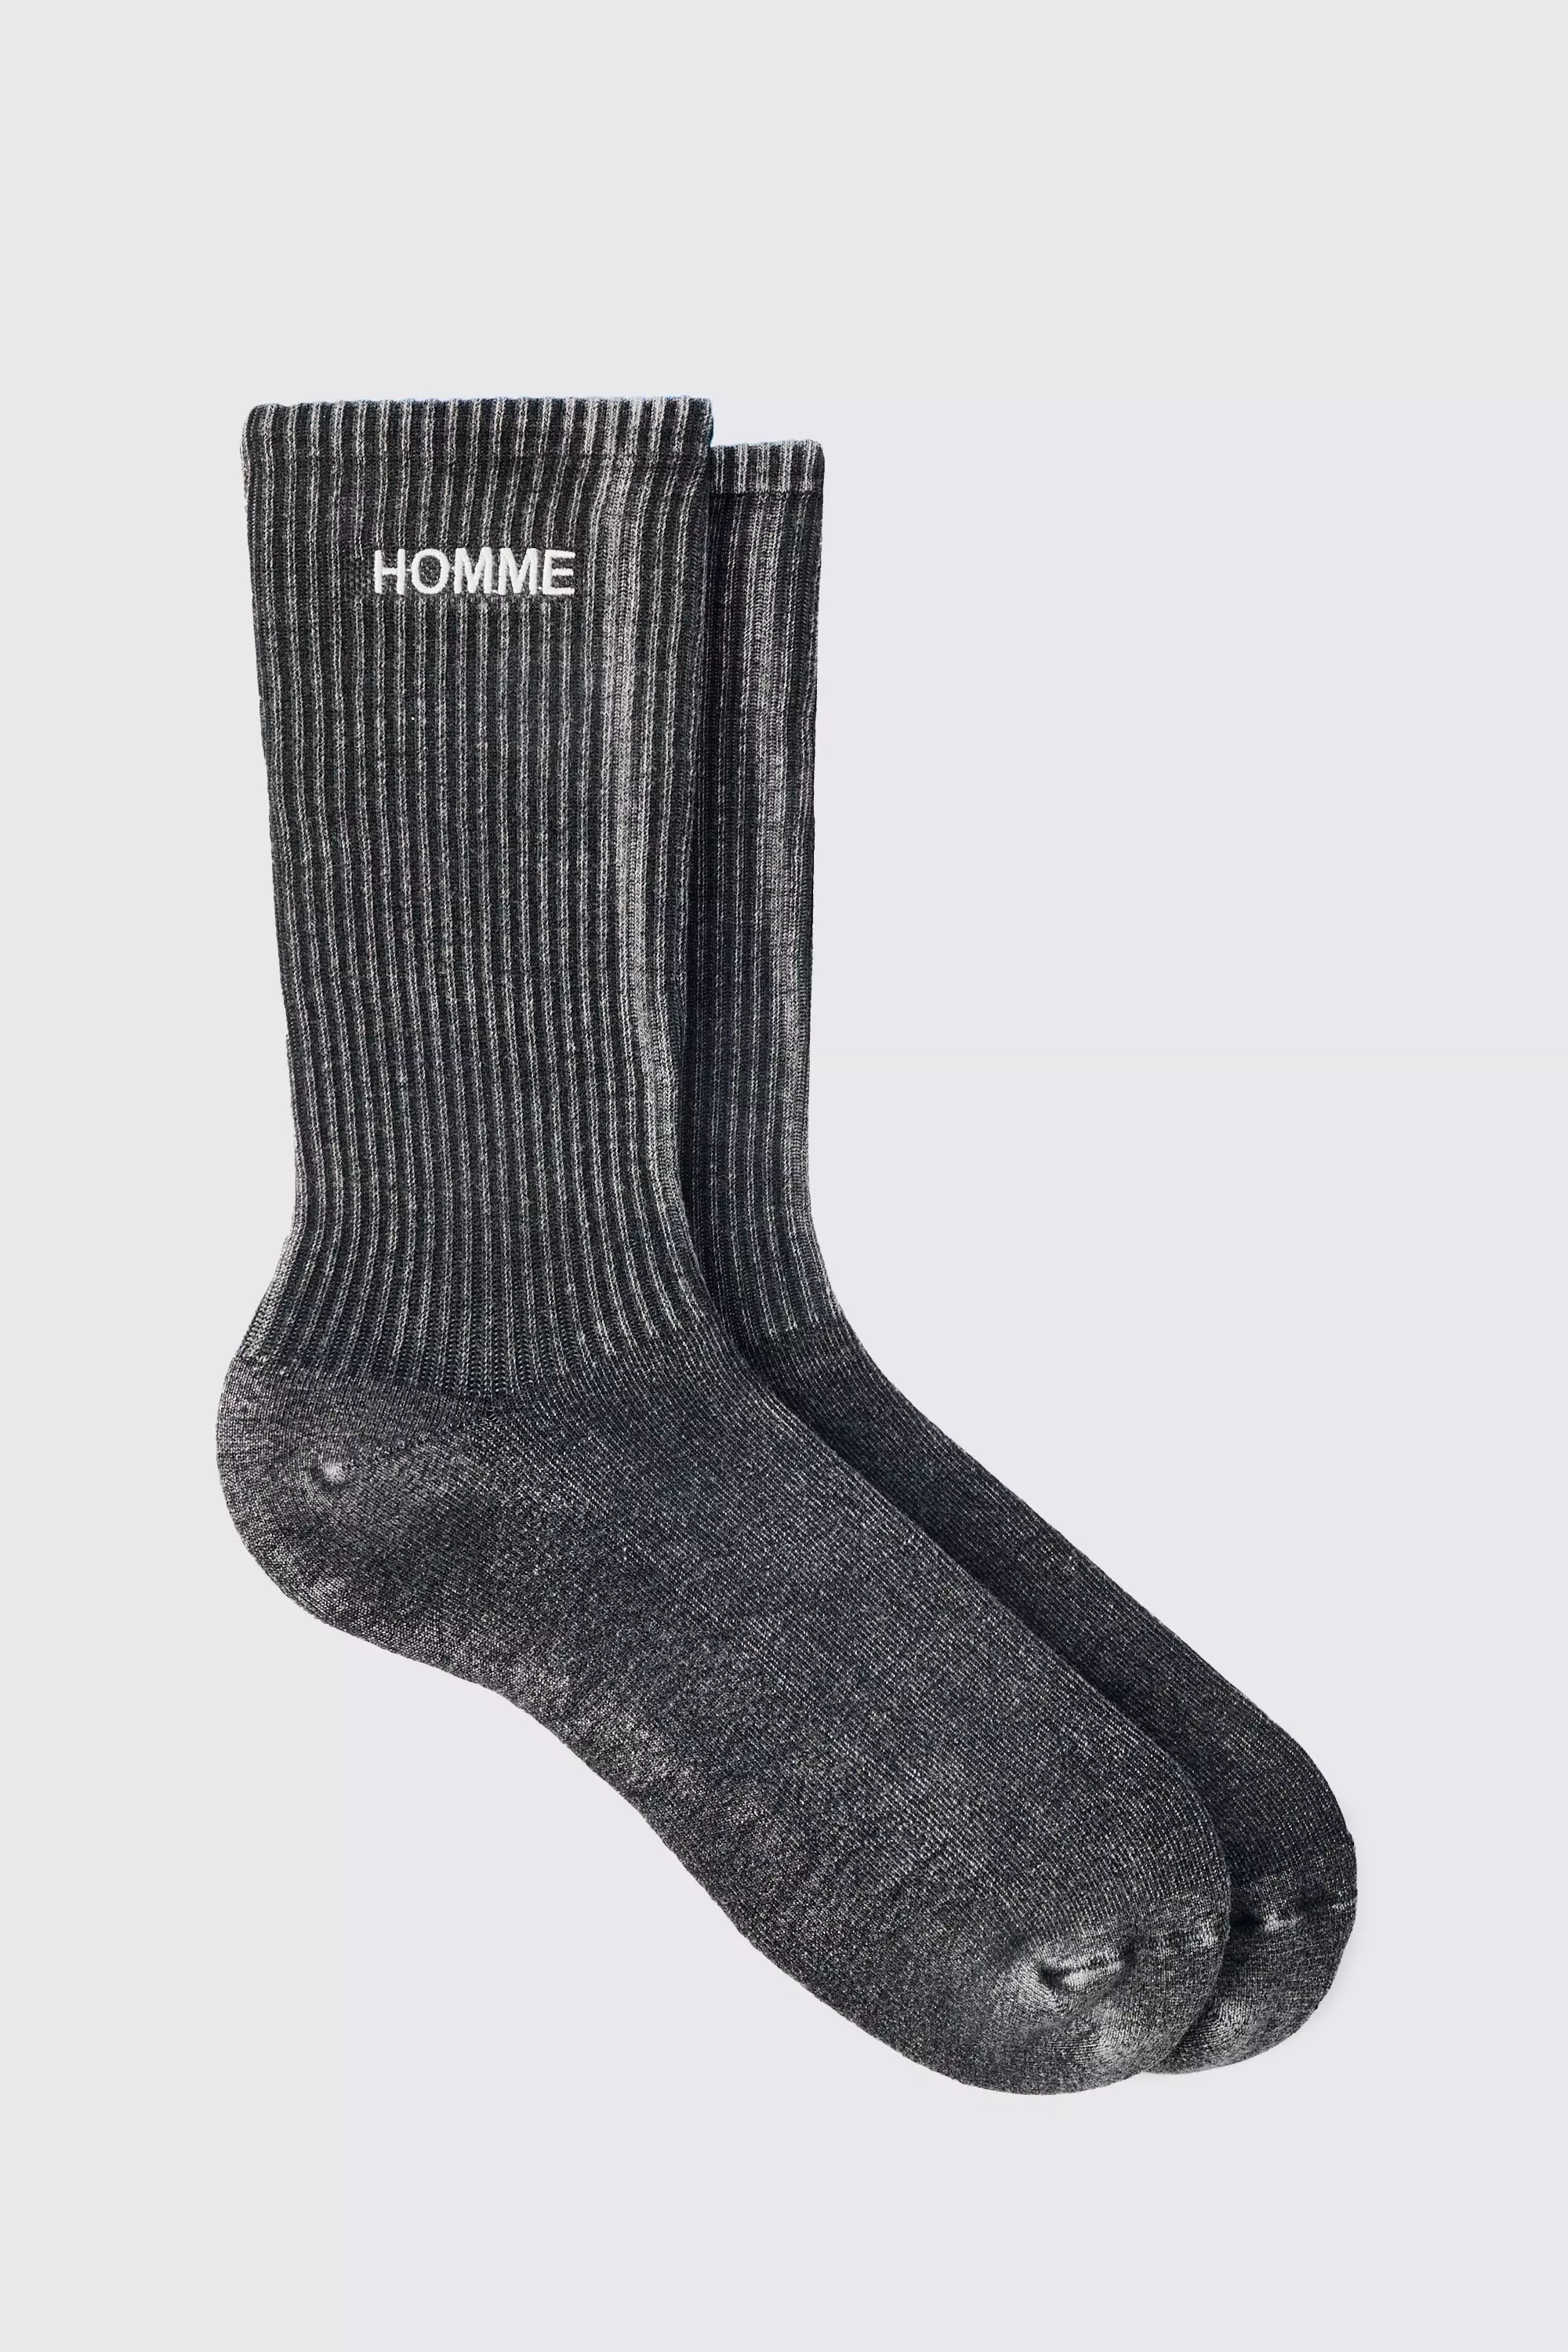 Homme Overdyed Grey Socks Grey